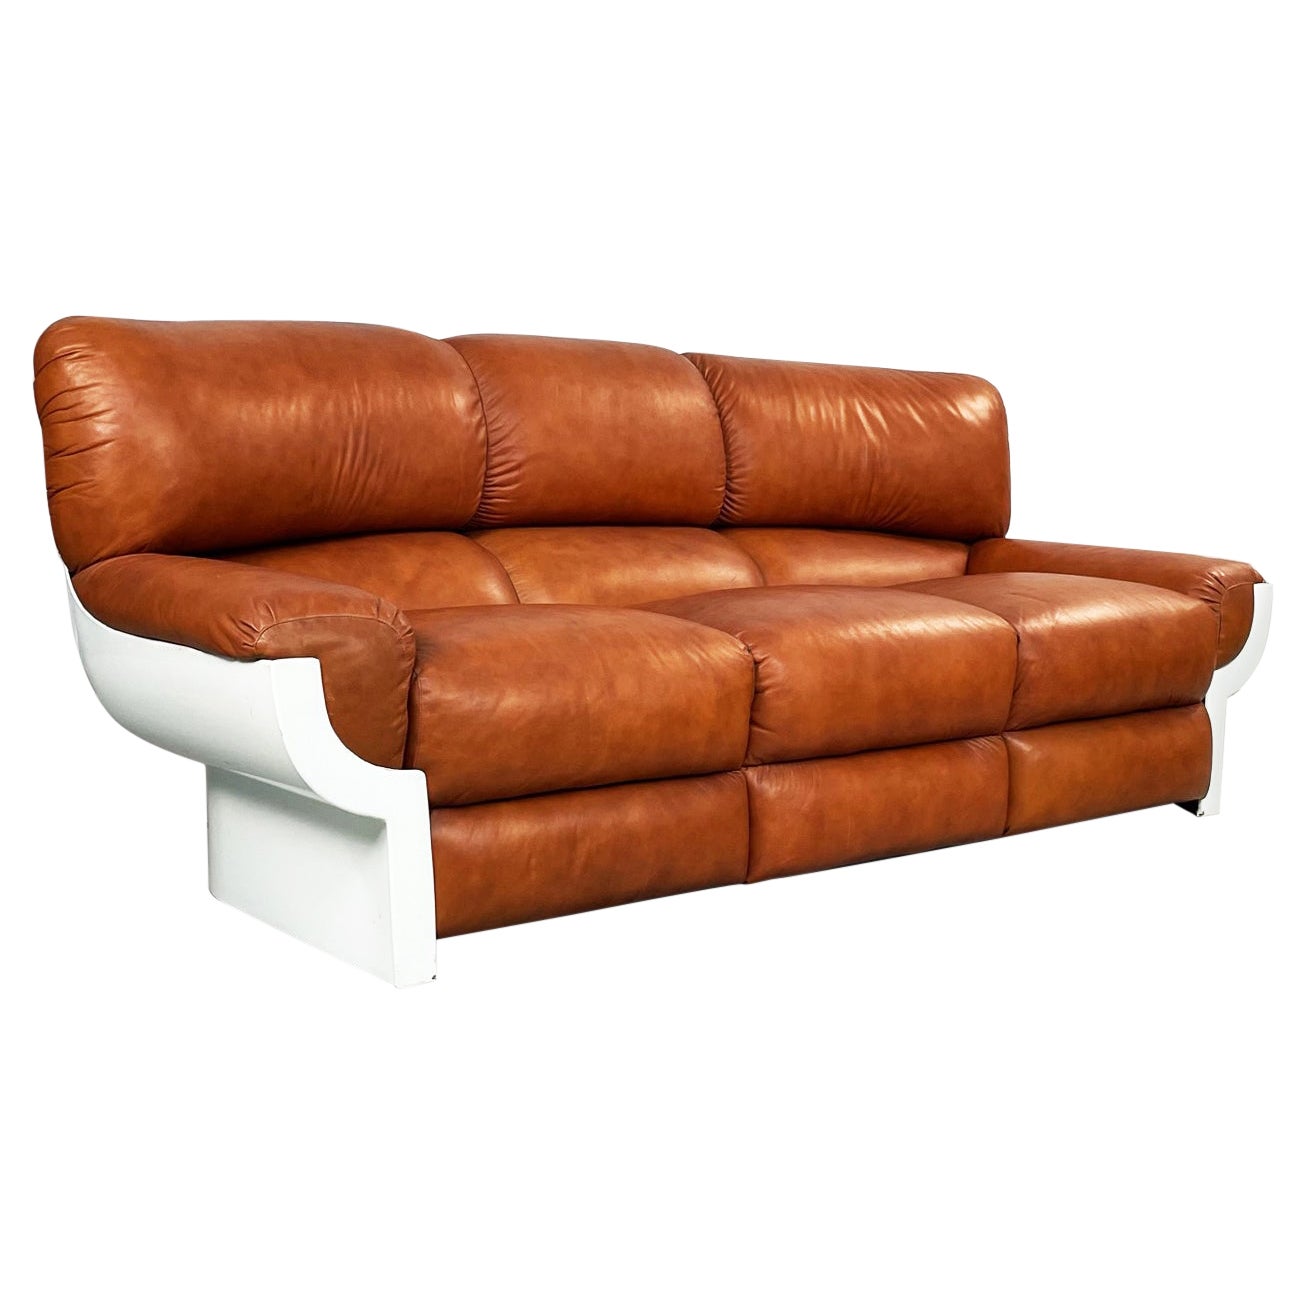 Italian Mid-Century Brown Leather Plastic Sofa Flou by Betti Habitat Ids, 1970s For Sale